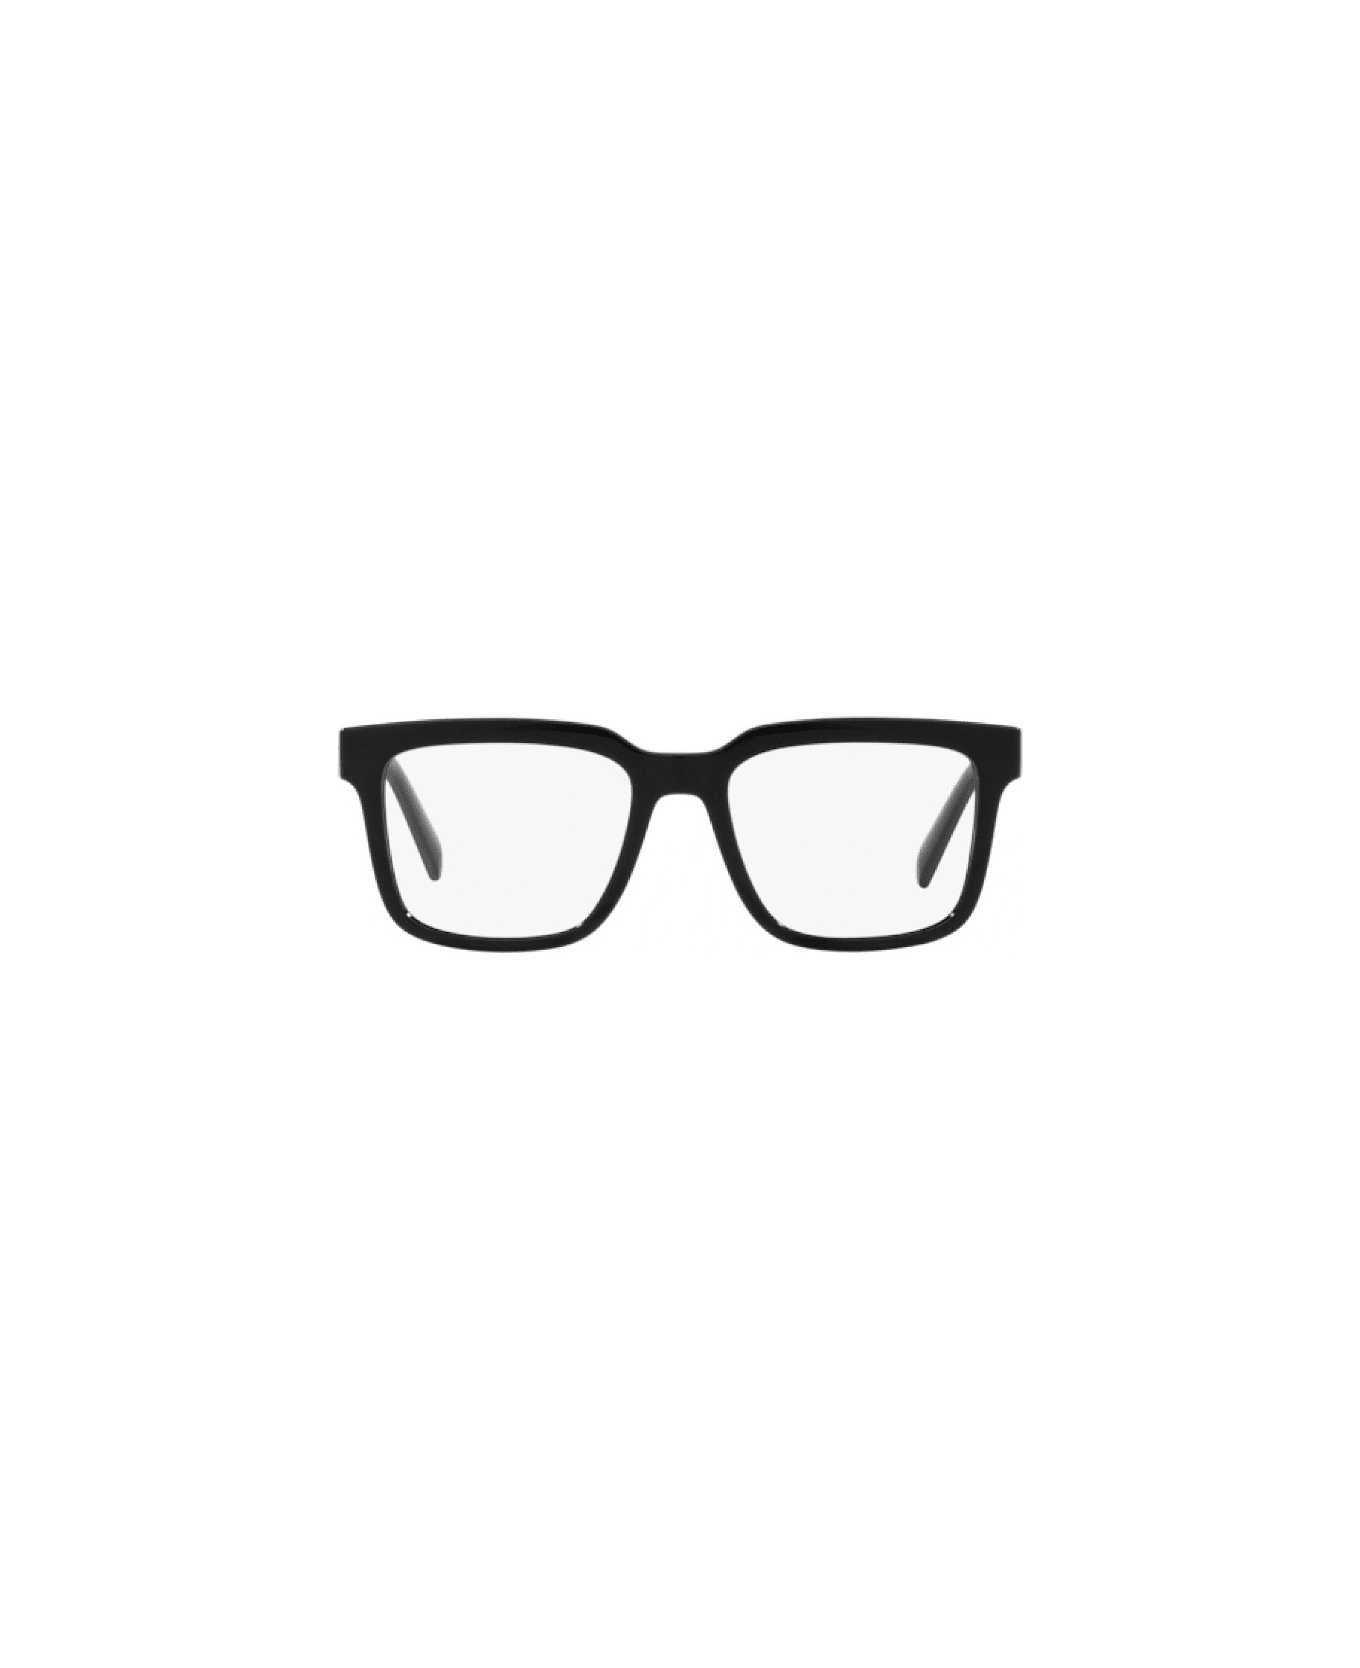 Dolce & Gabbana Eyewear DG5101 501 Glasses - Nero アイウェア